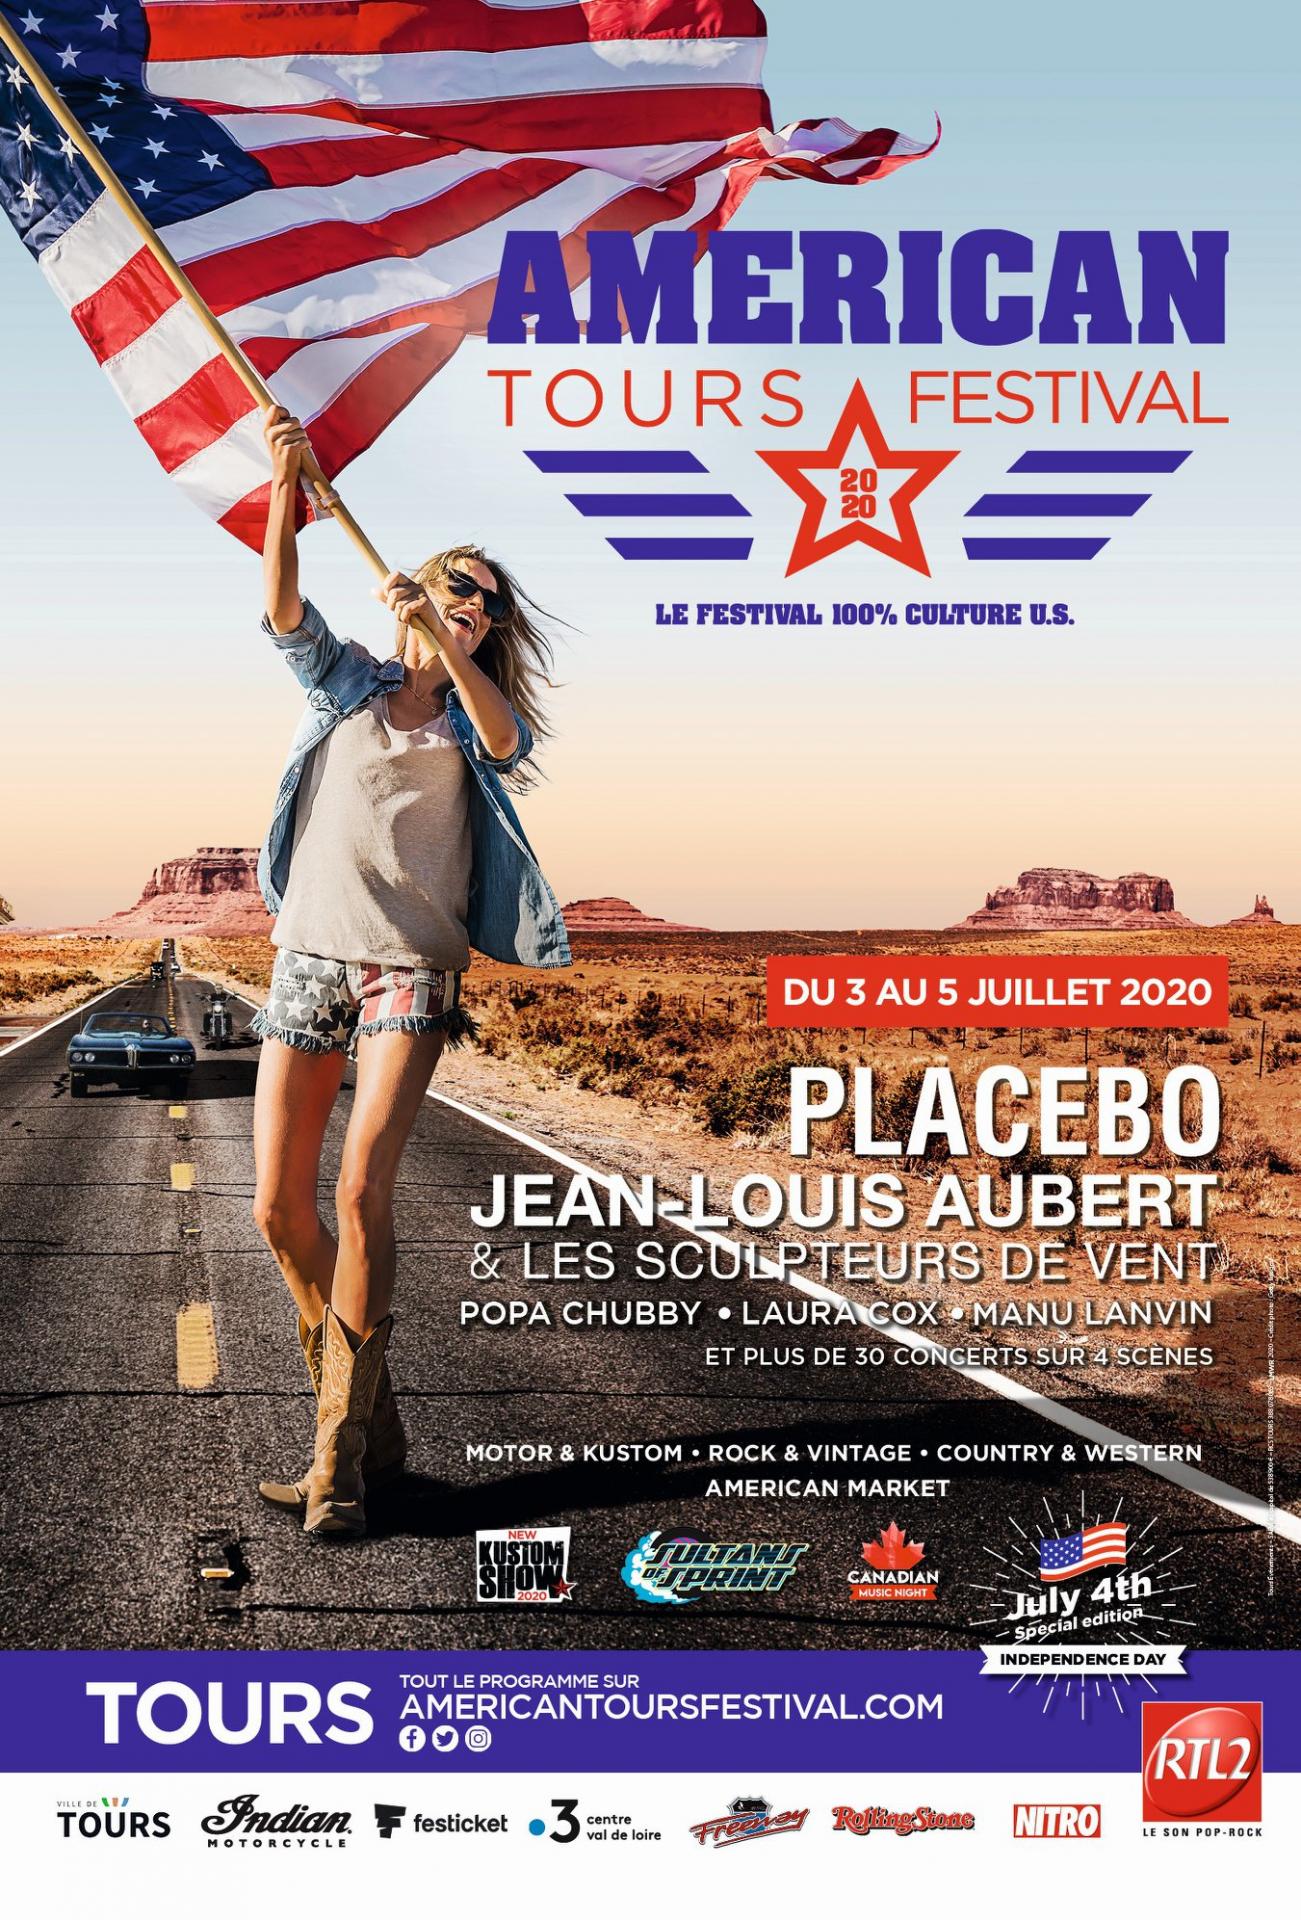 American tours festival